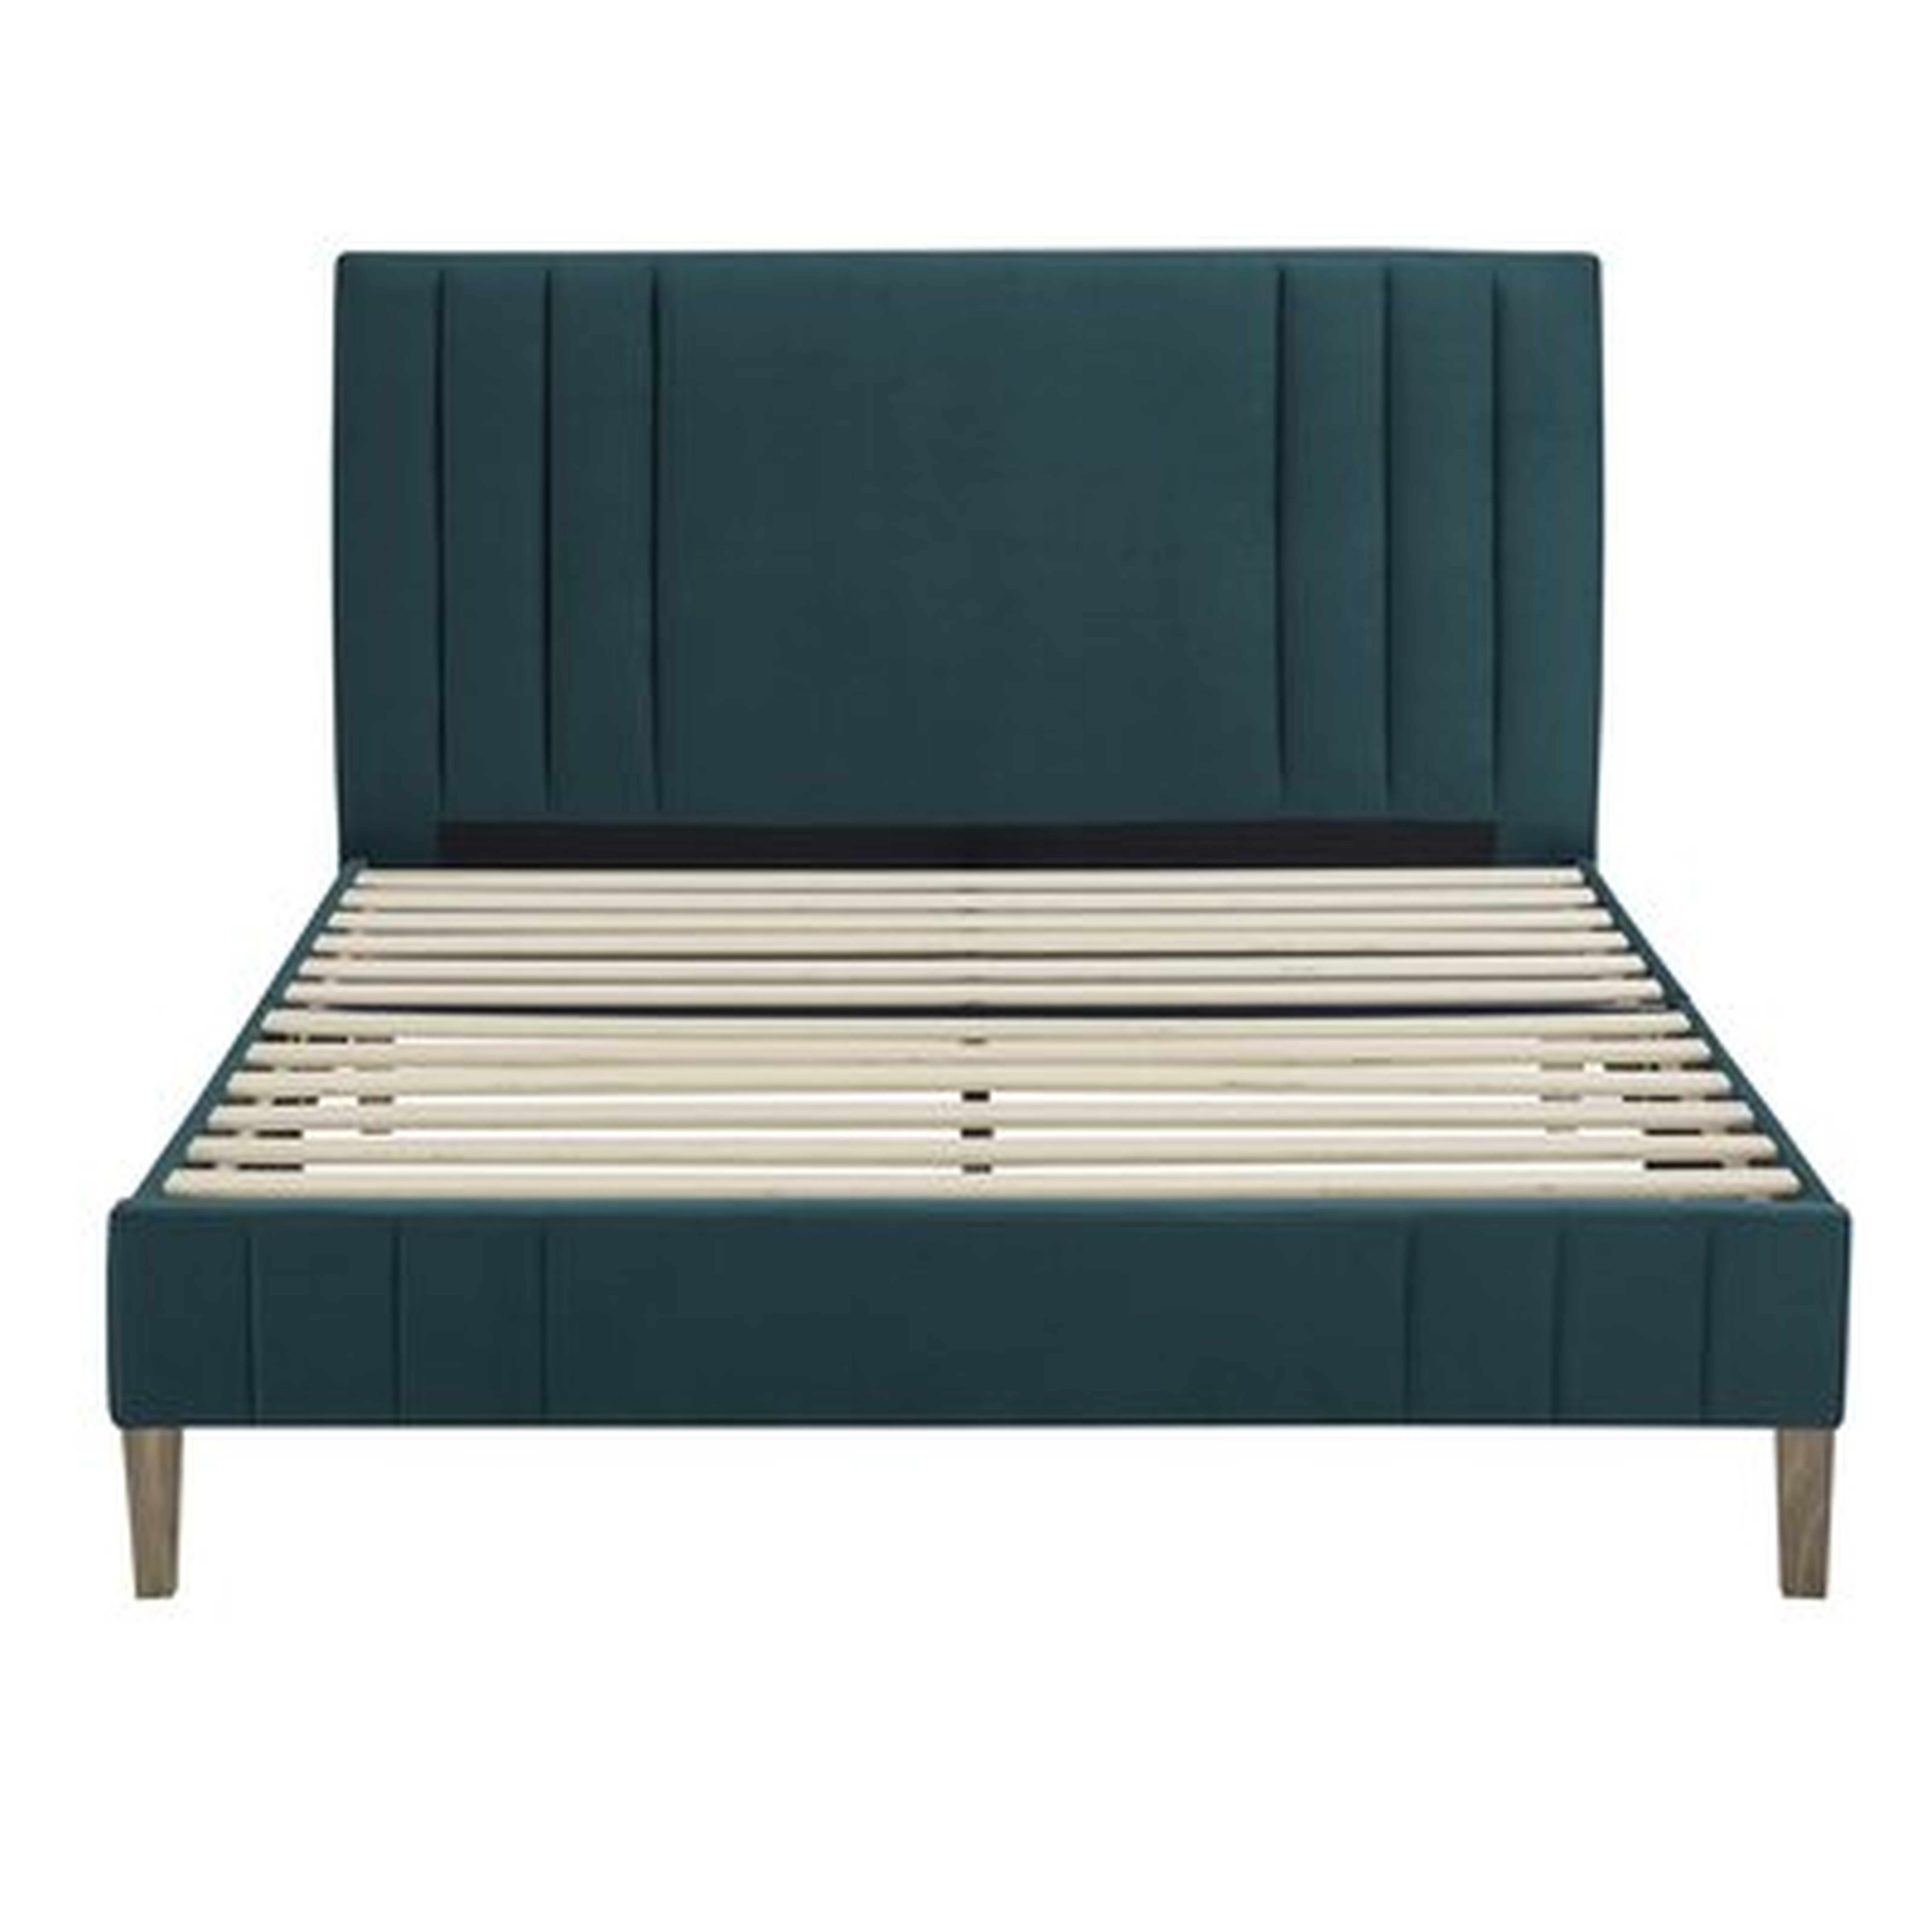 Moniz Upholstered Platform Bed - Wayfair